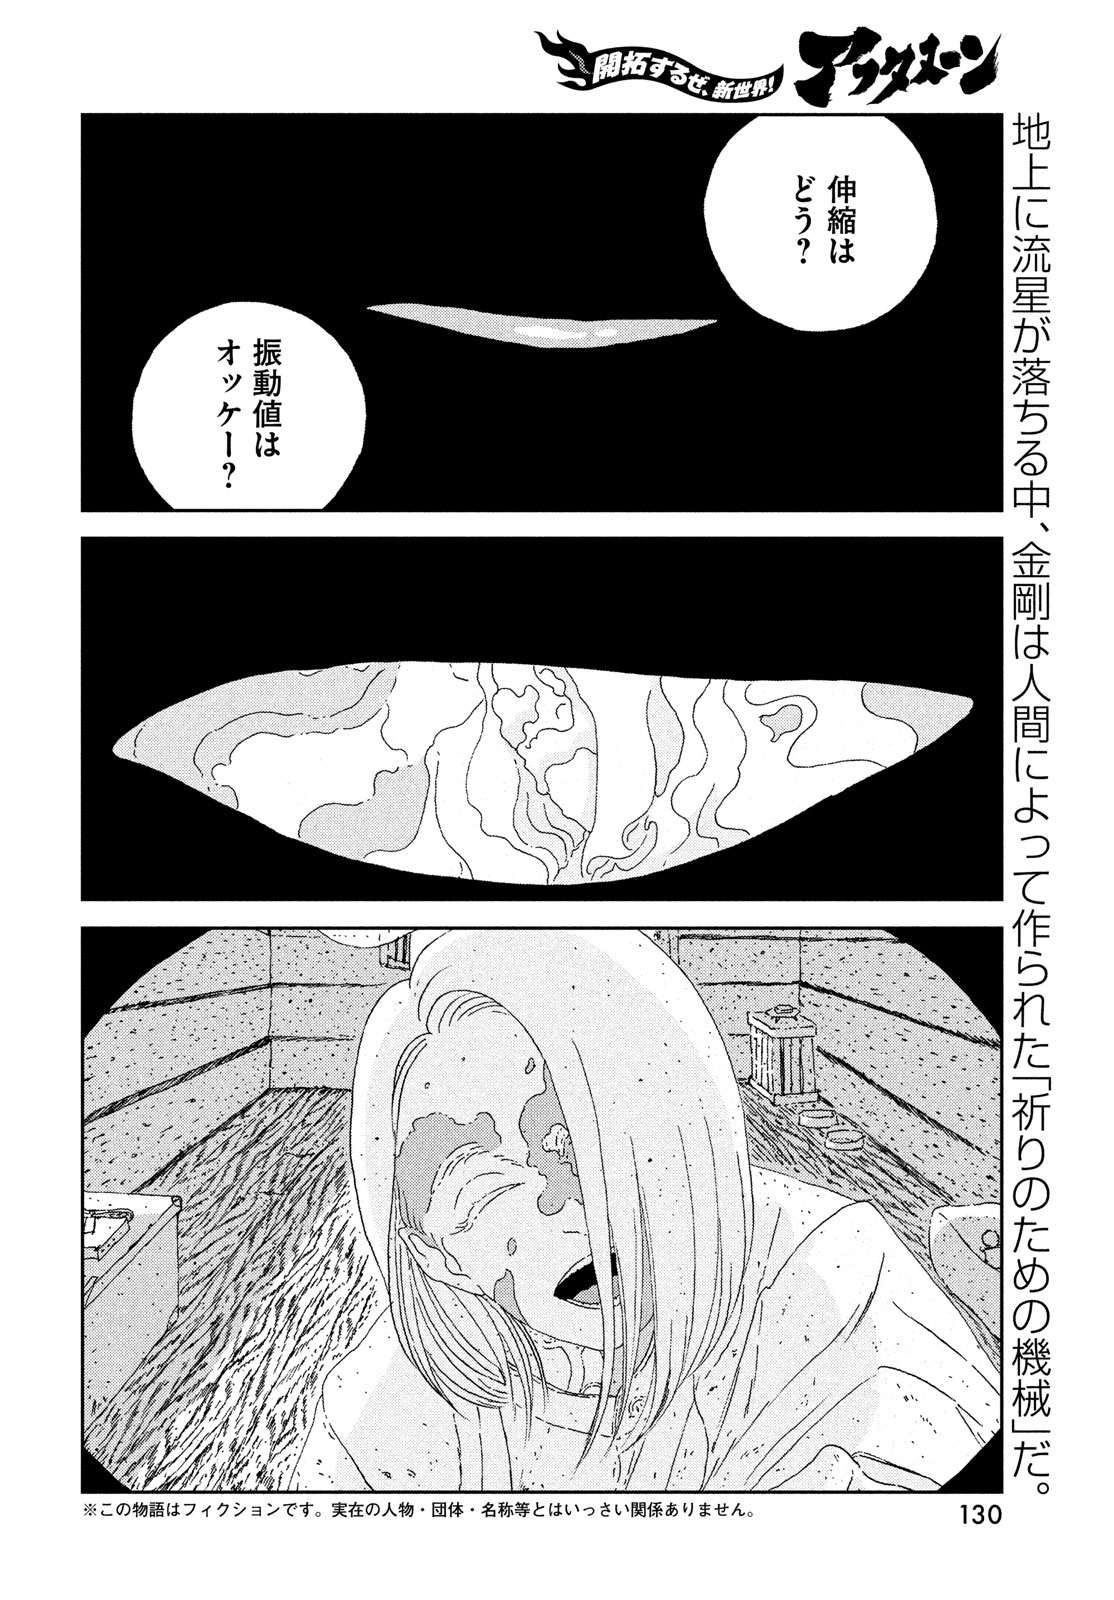 Houseki no Kuni - Chapter 97 - Page 2